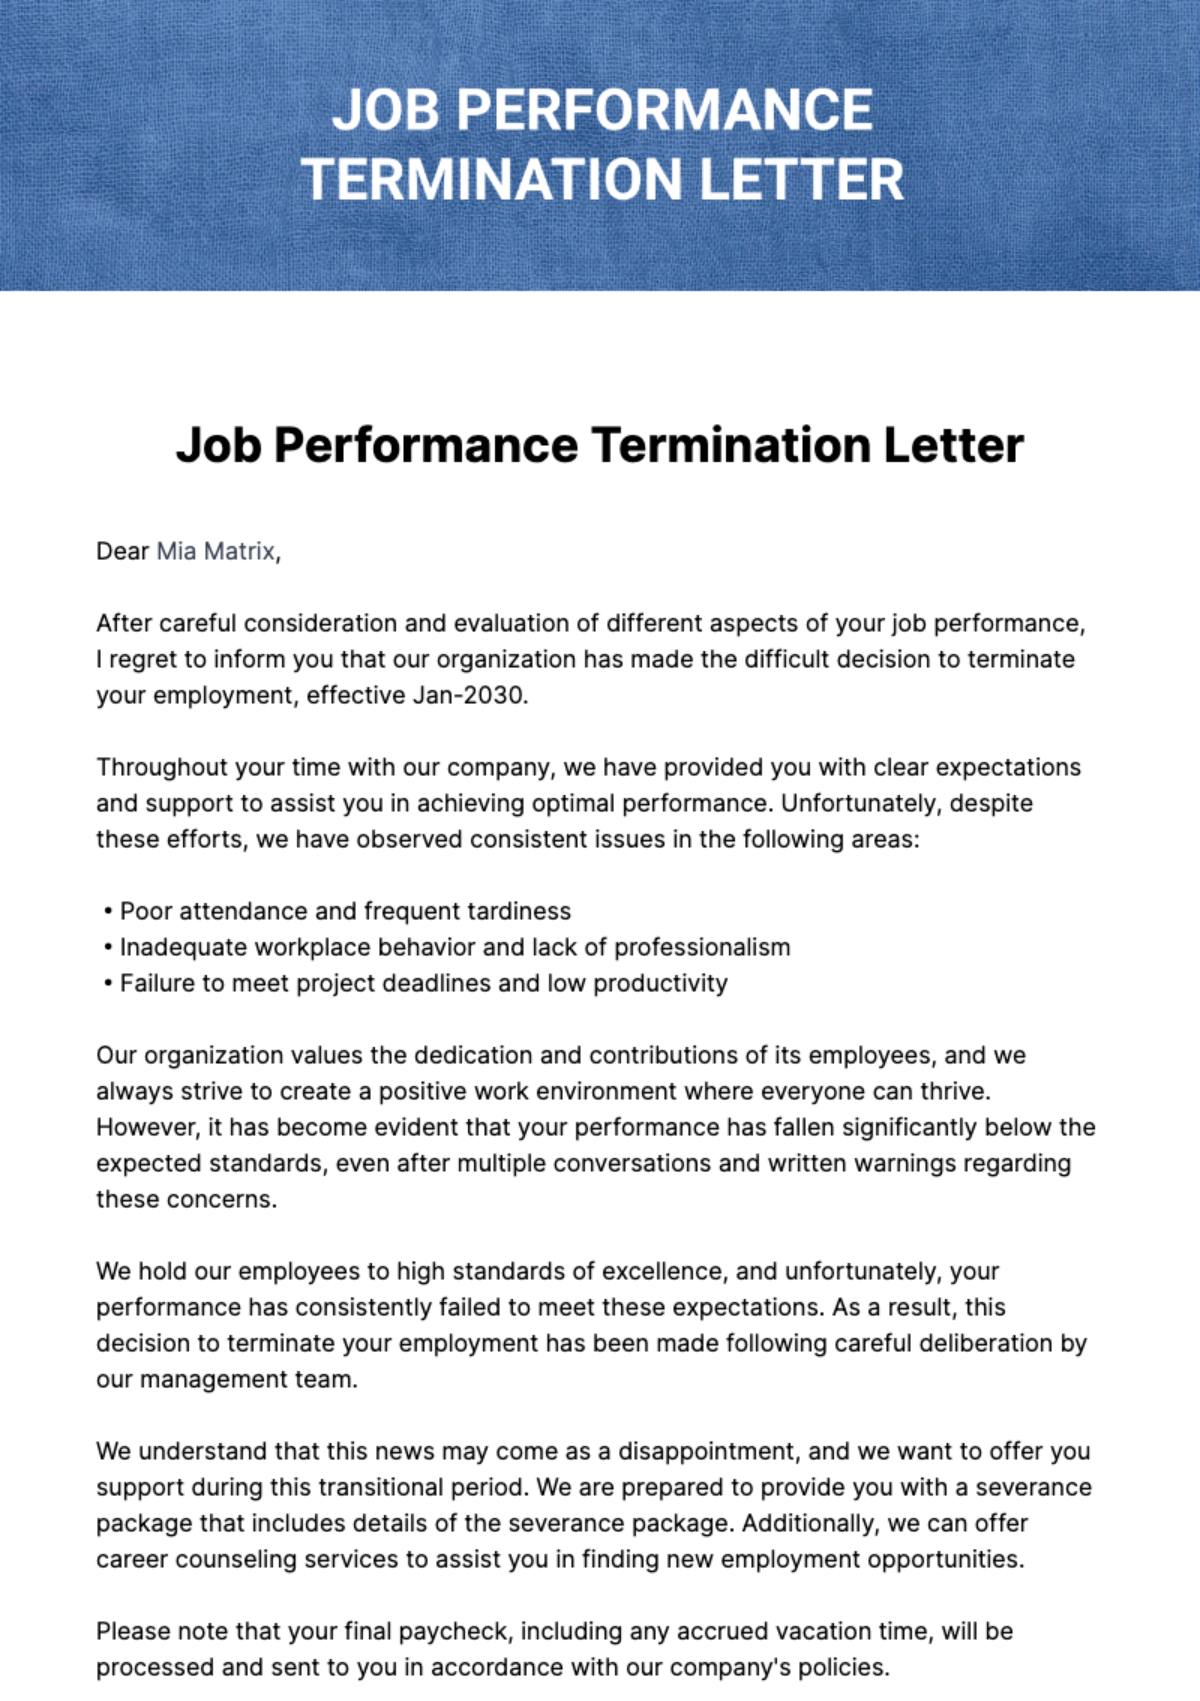 Job Performance Termination Letter Template